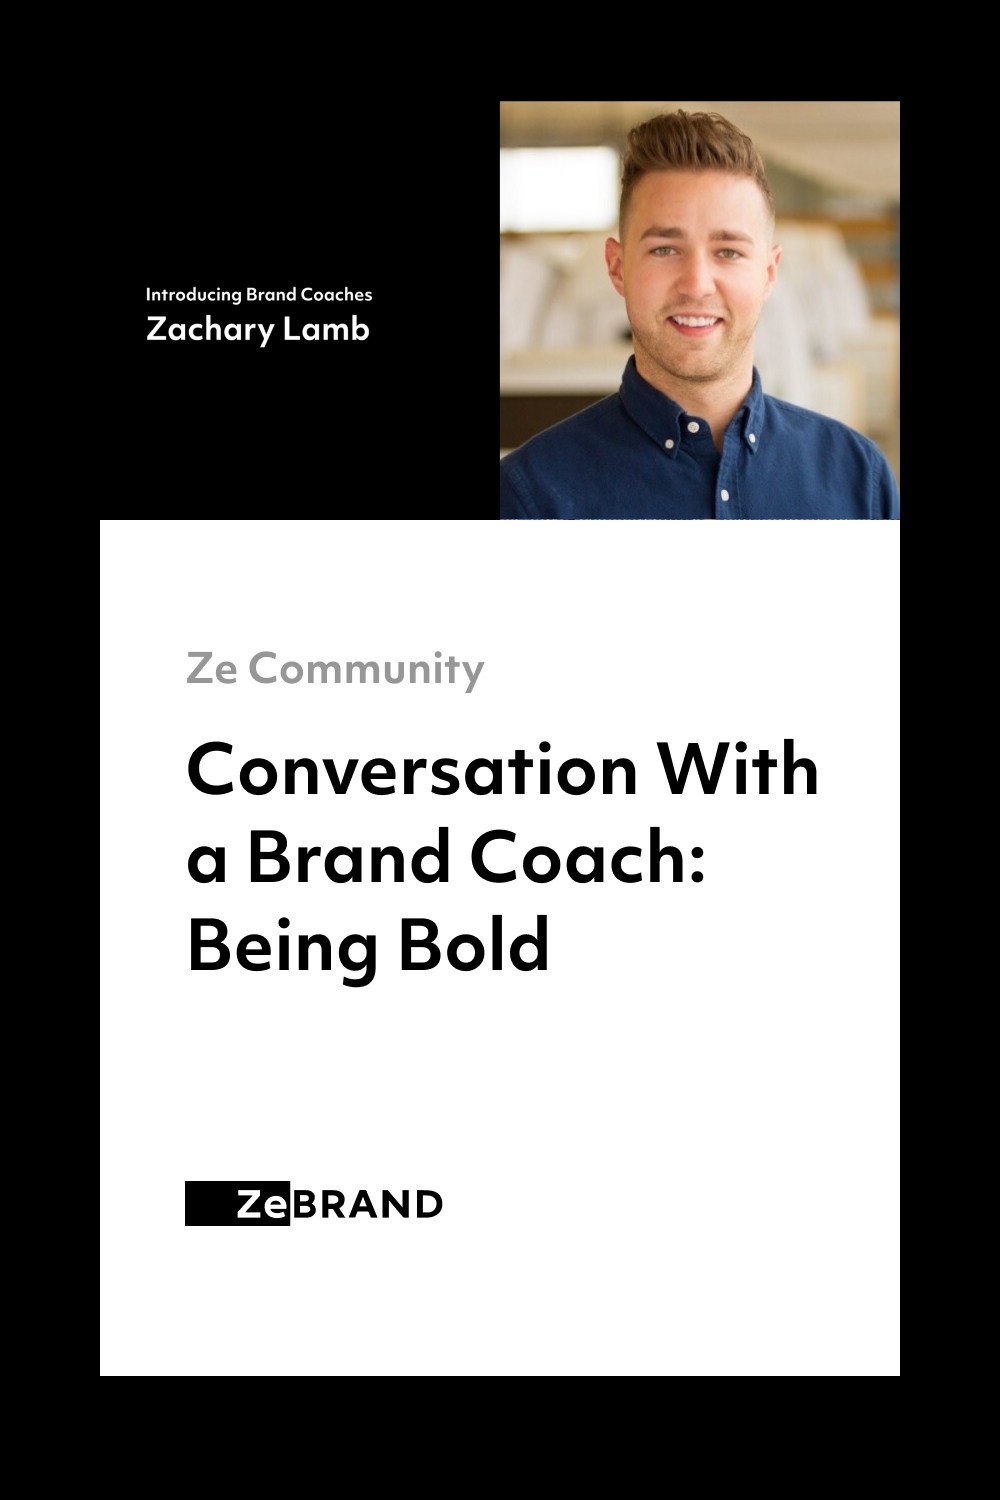 Introduction of ZeBrand's Brand Coach - Zachary Lamb